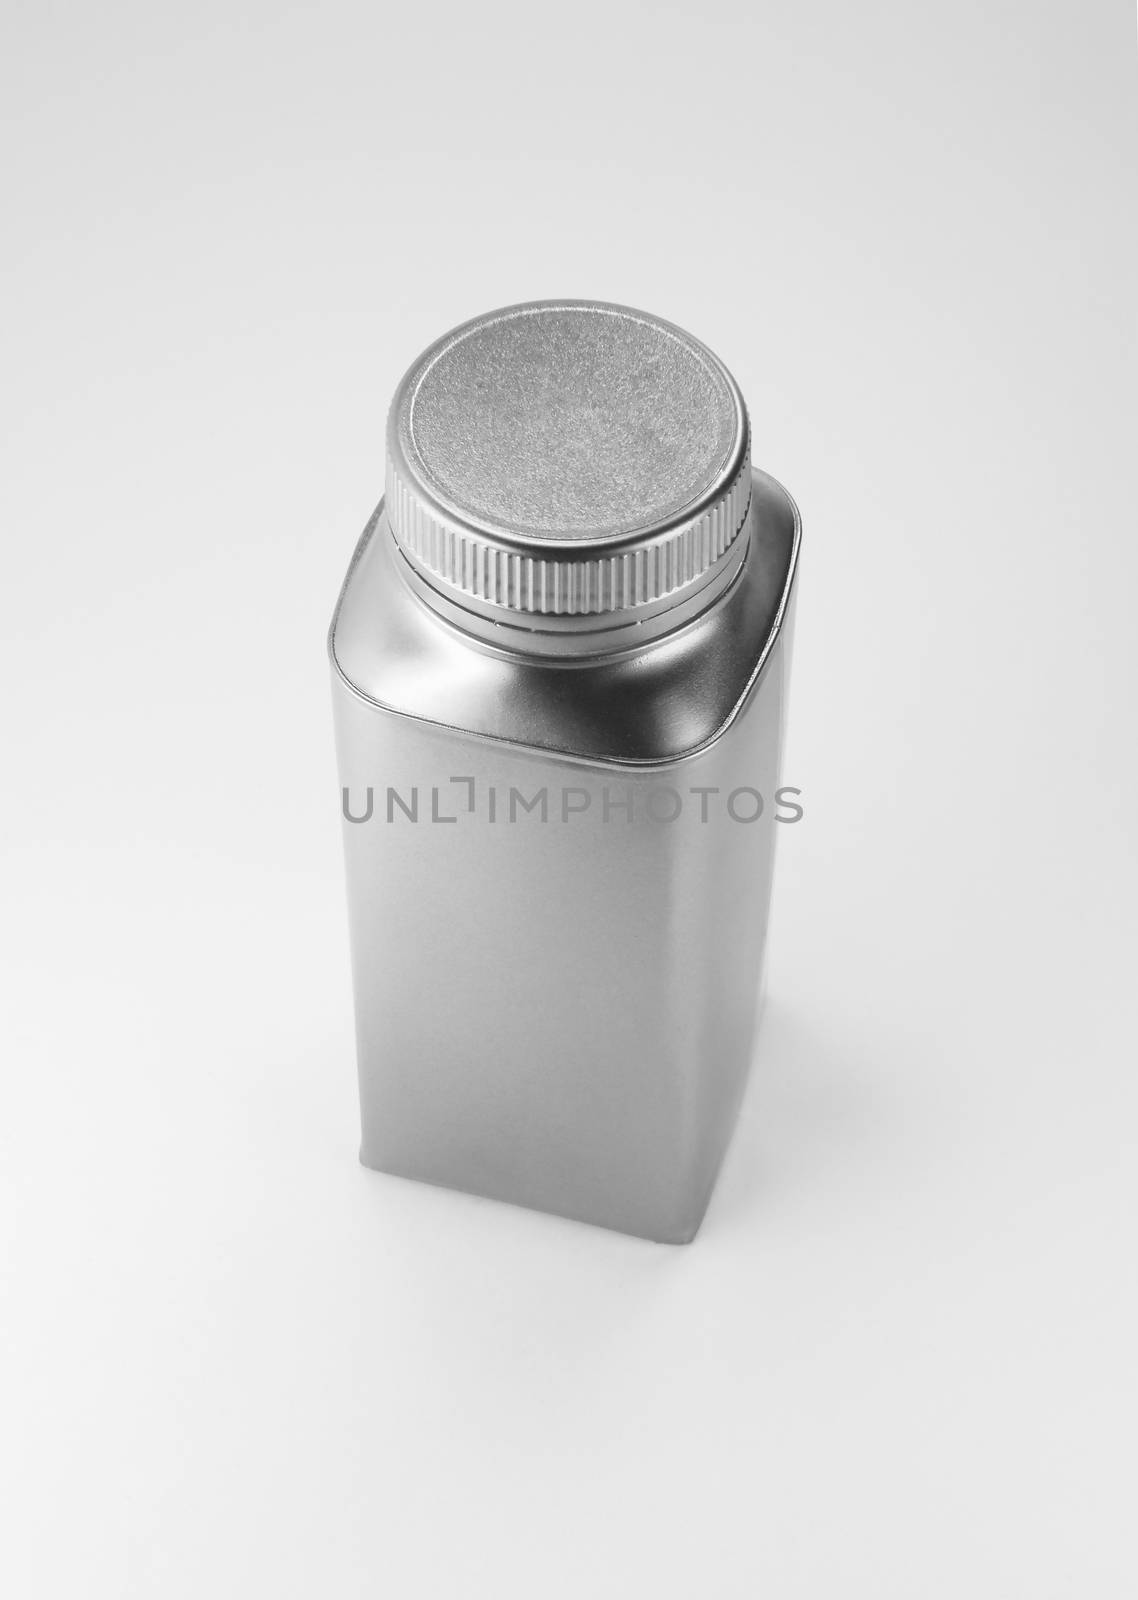 aluminium bottle. Clean pattern for packaging design